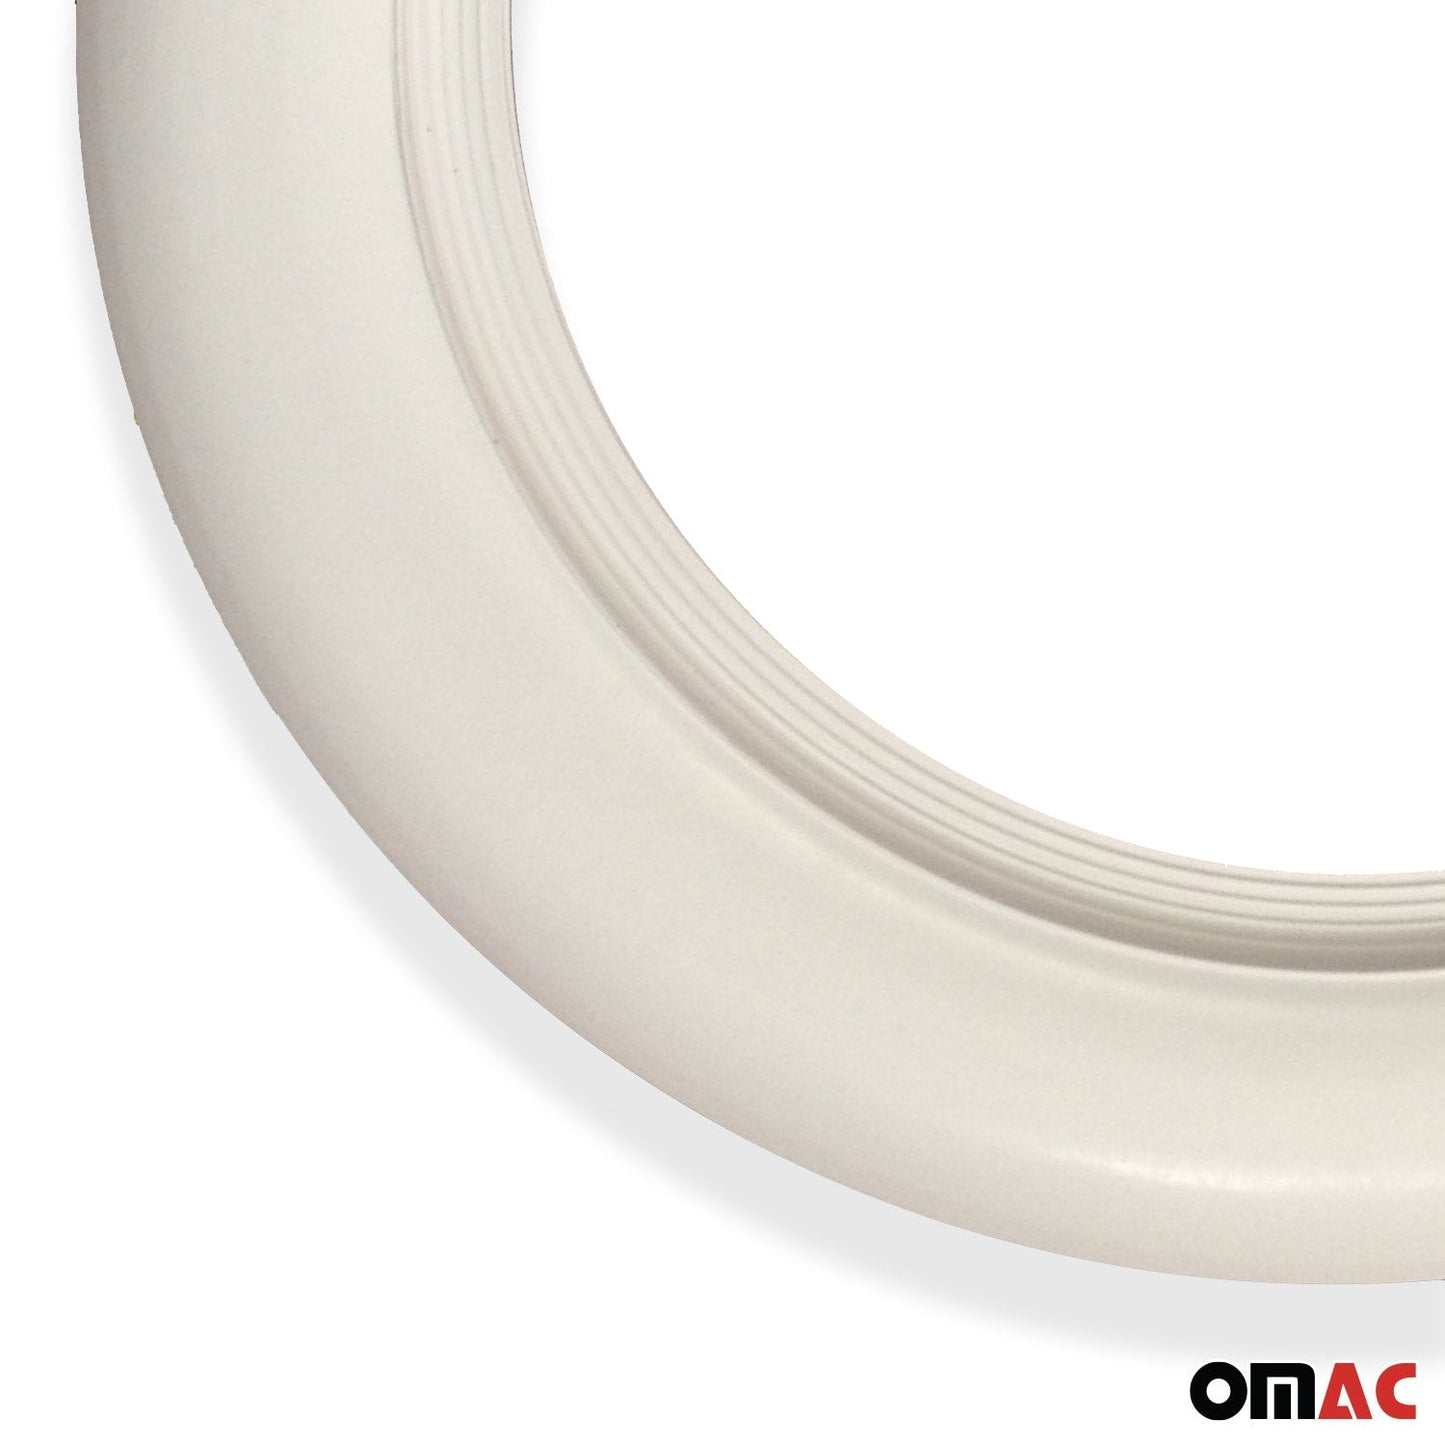 OMAC White Wall Tire Insert 16" Band Portawall Rims Sidewall Rubber Ring Set 4 Pcs 96TW016WW